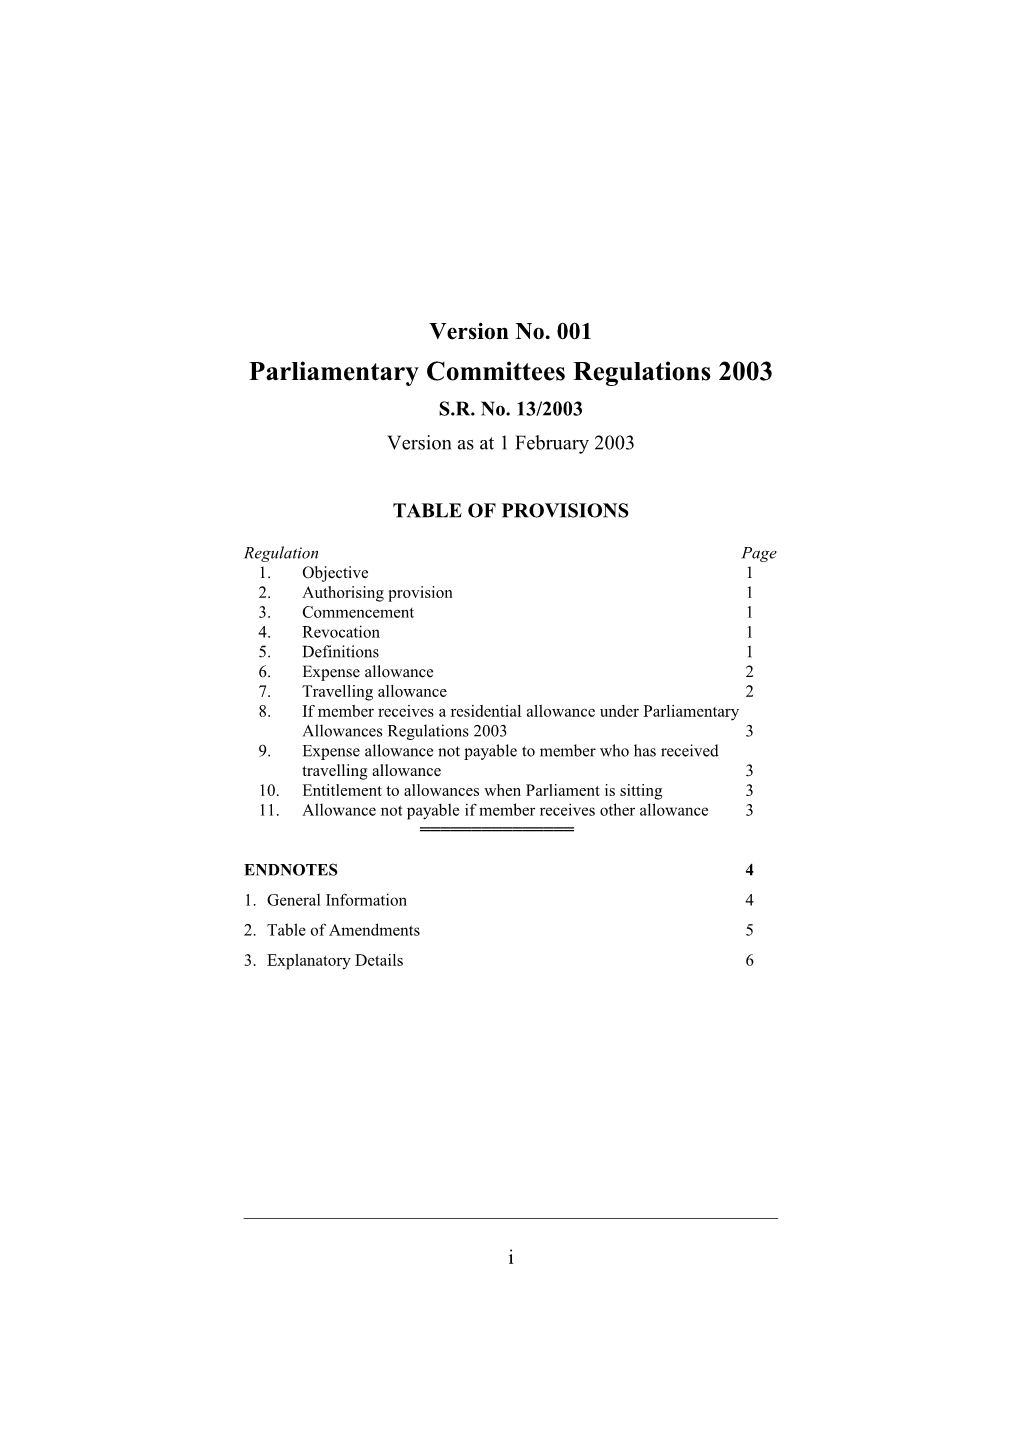 Parliamentary Committees Regulations 2003